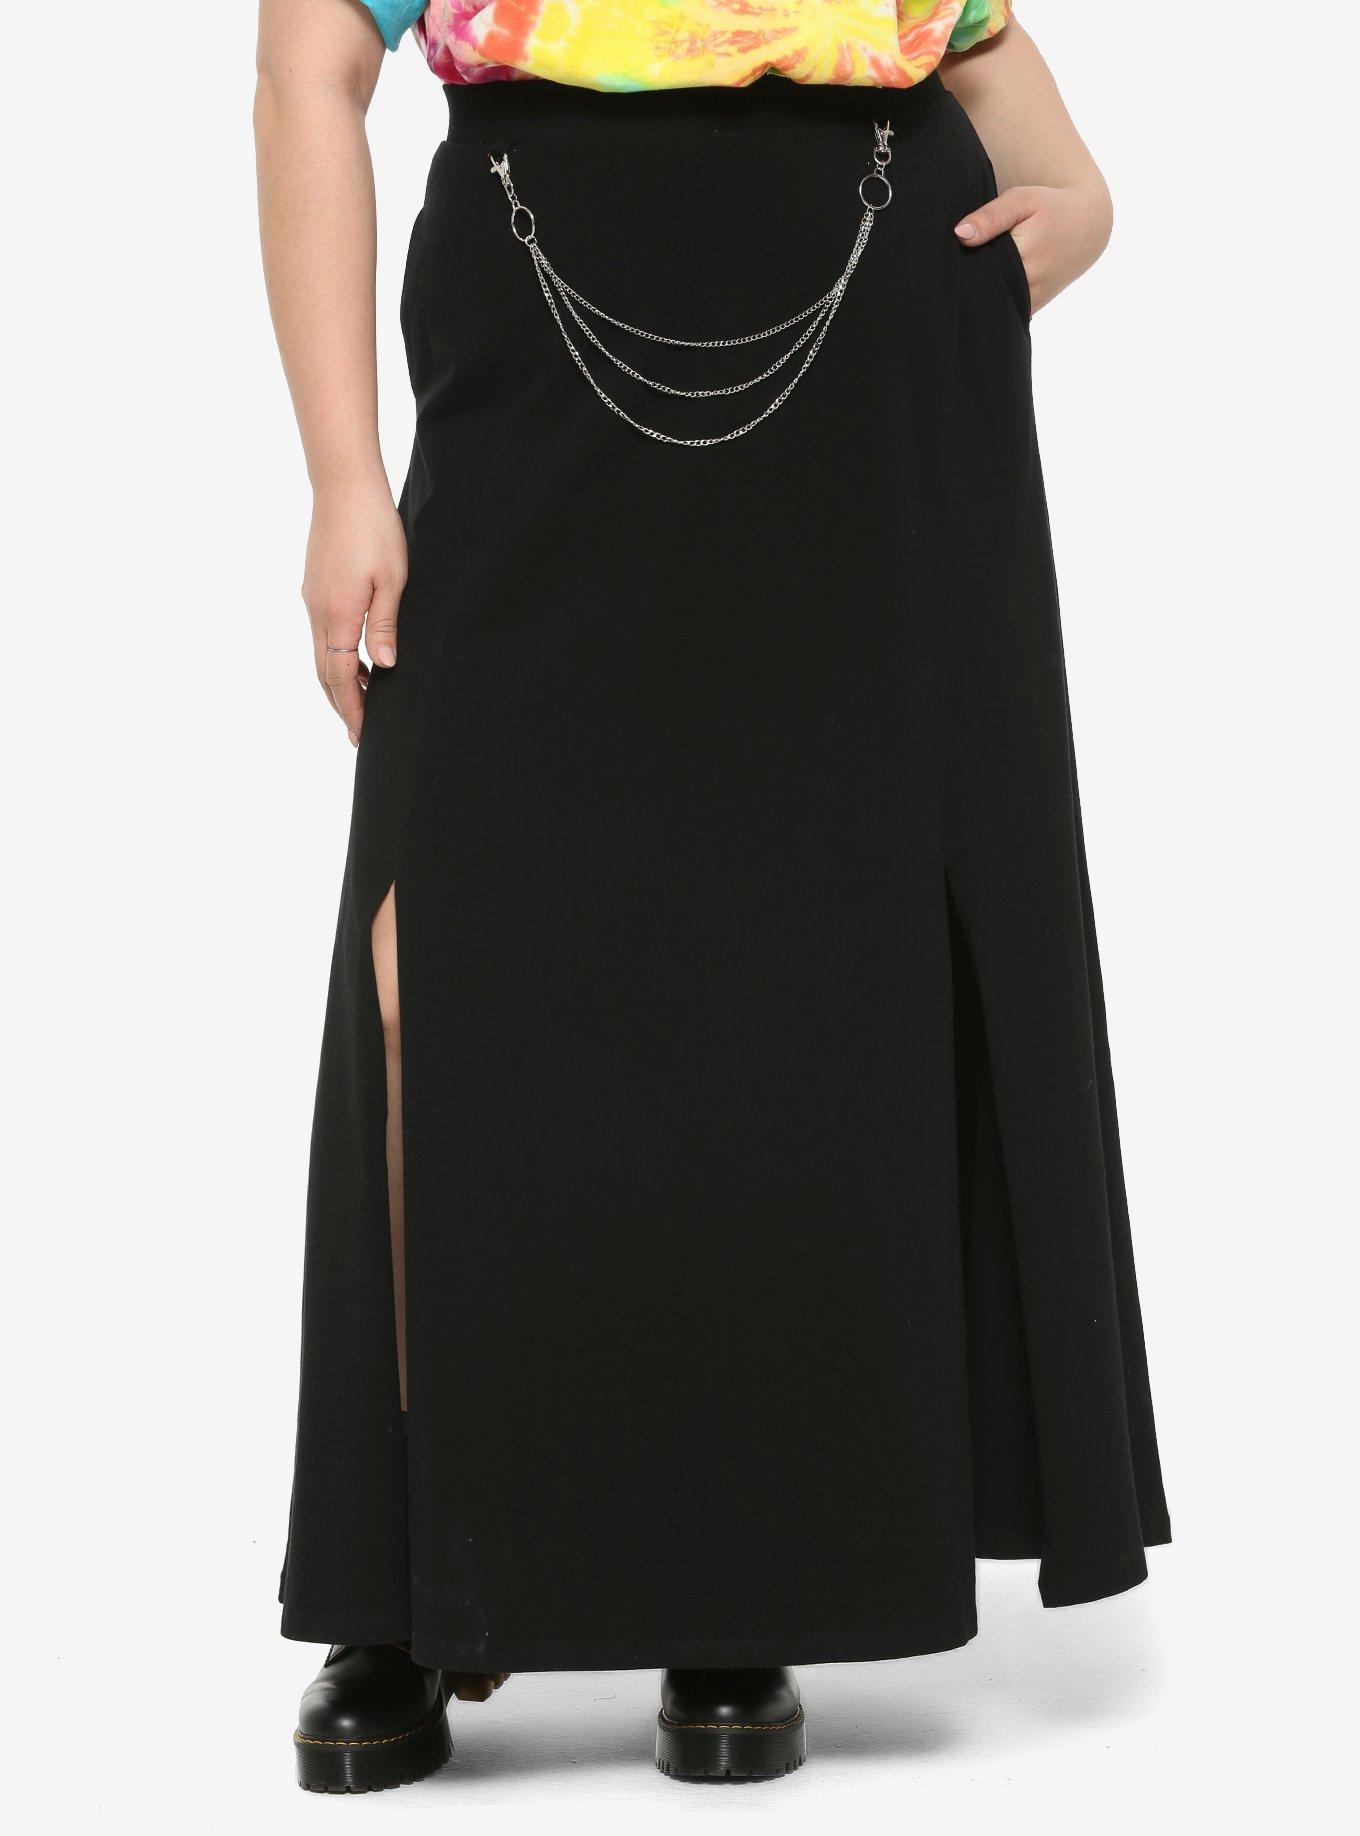 Chain & Double Slits Black Maxi Skirt Plus Size, BLACK, hi-res